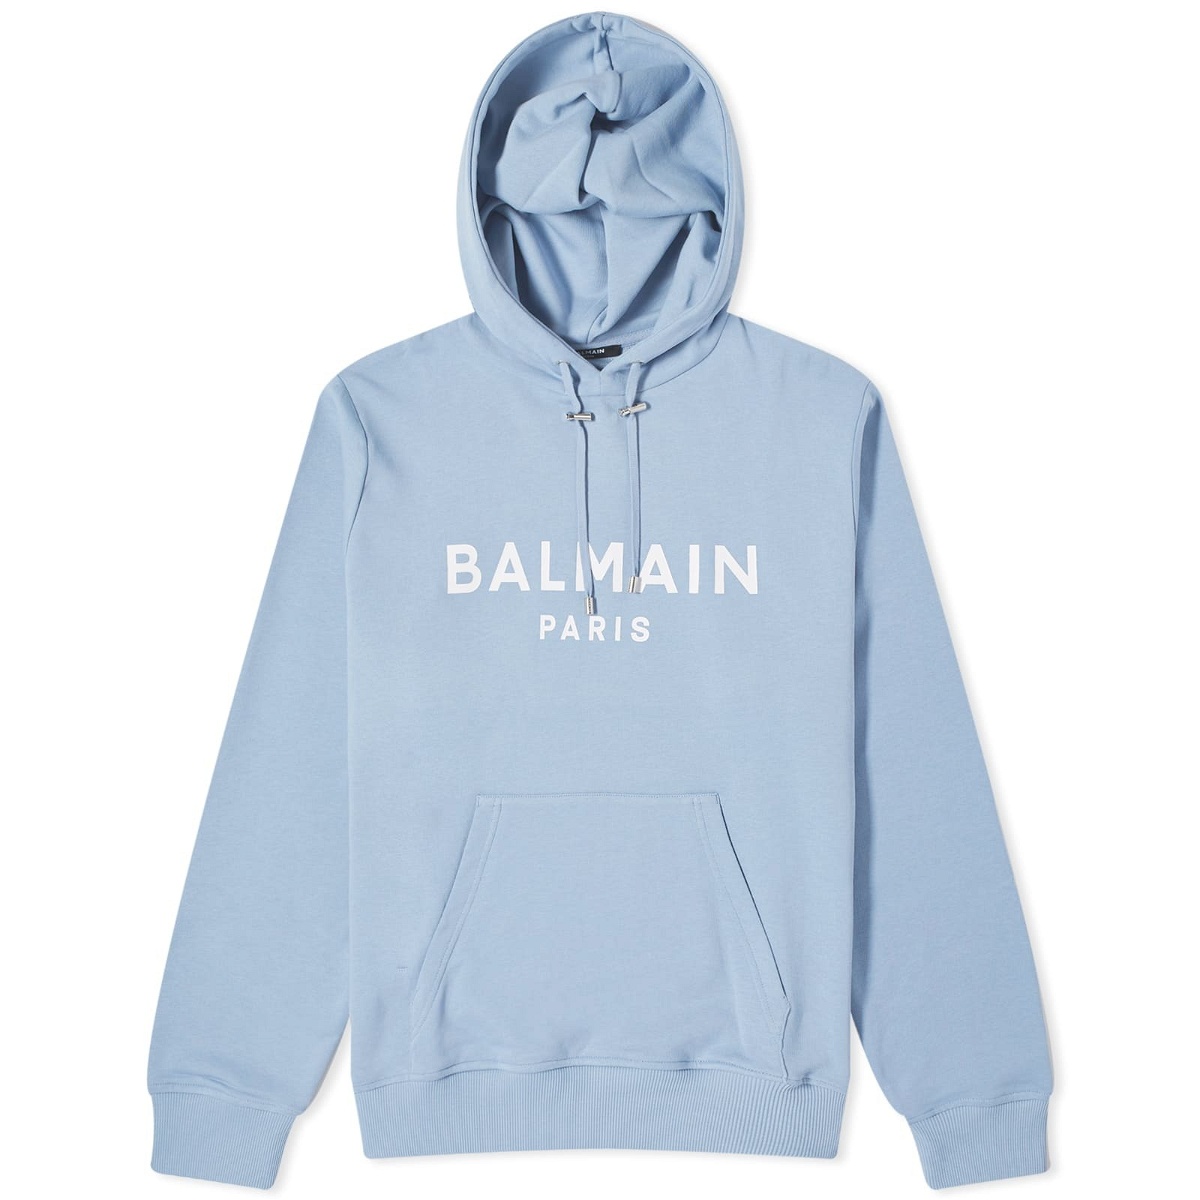 Photo: Balmain Men's Paris Logo Hoodie in Pale Blue/White